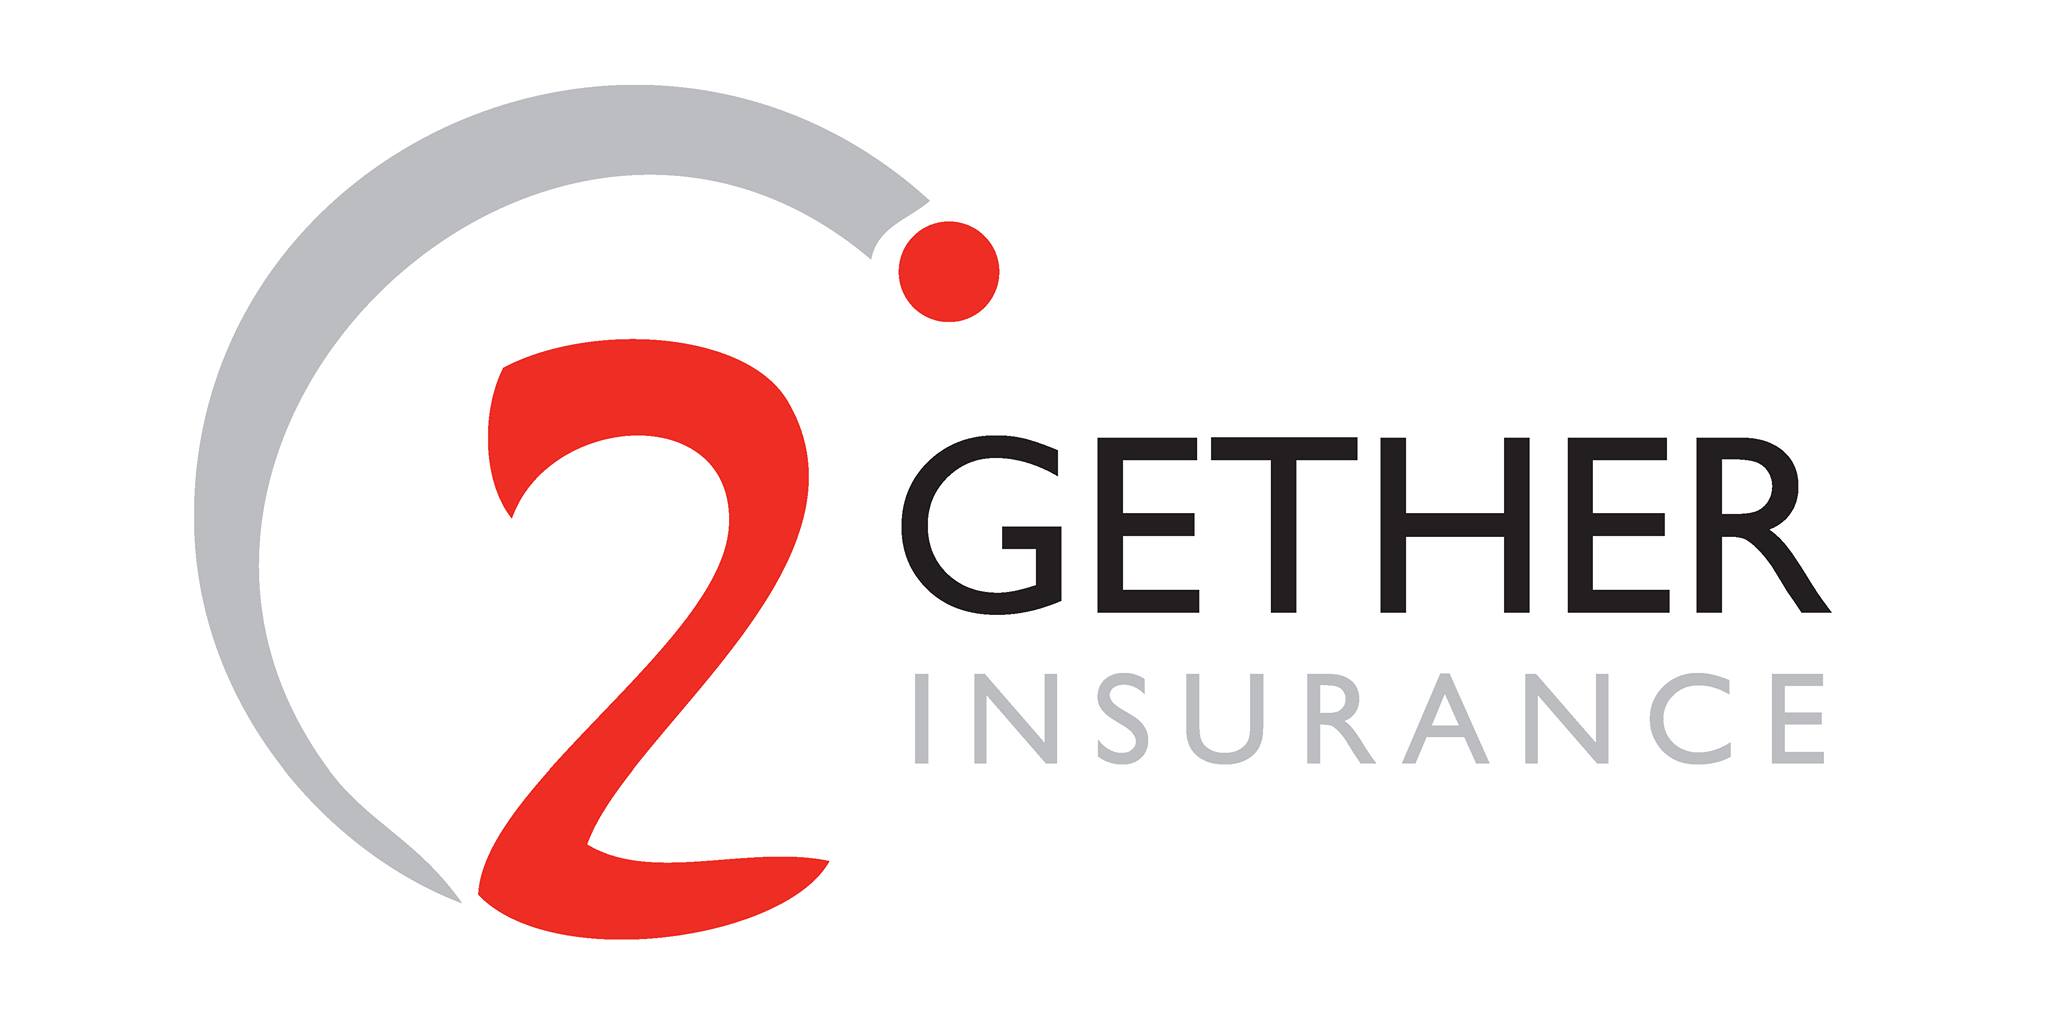 2Gether Insurance Ltd